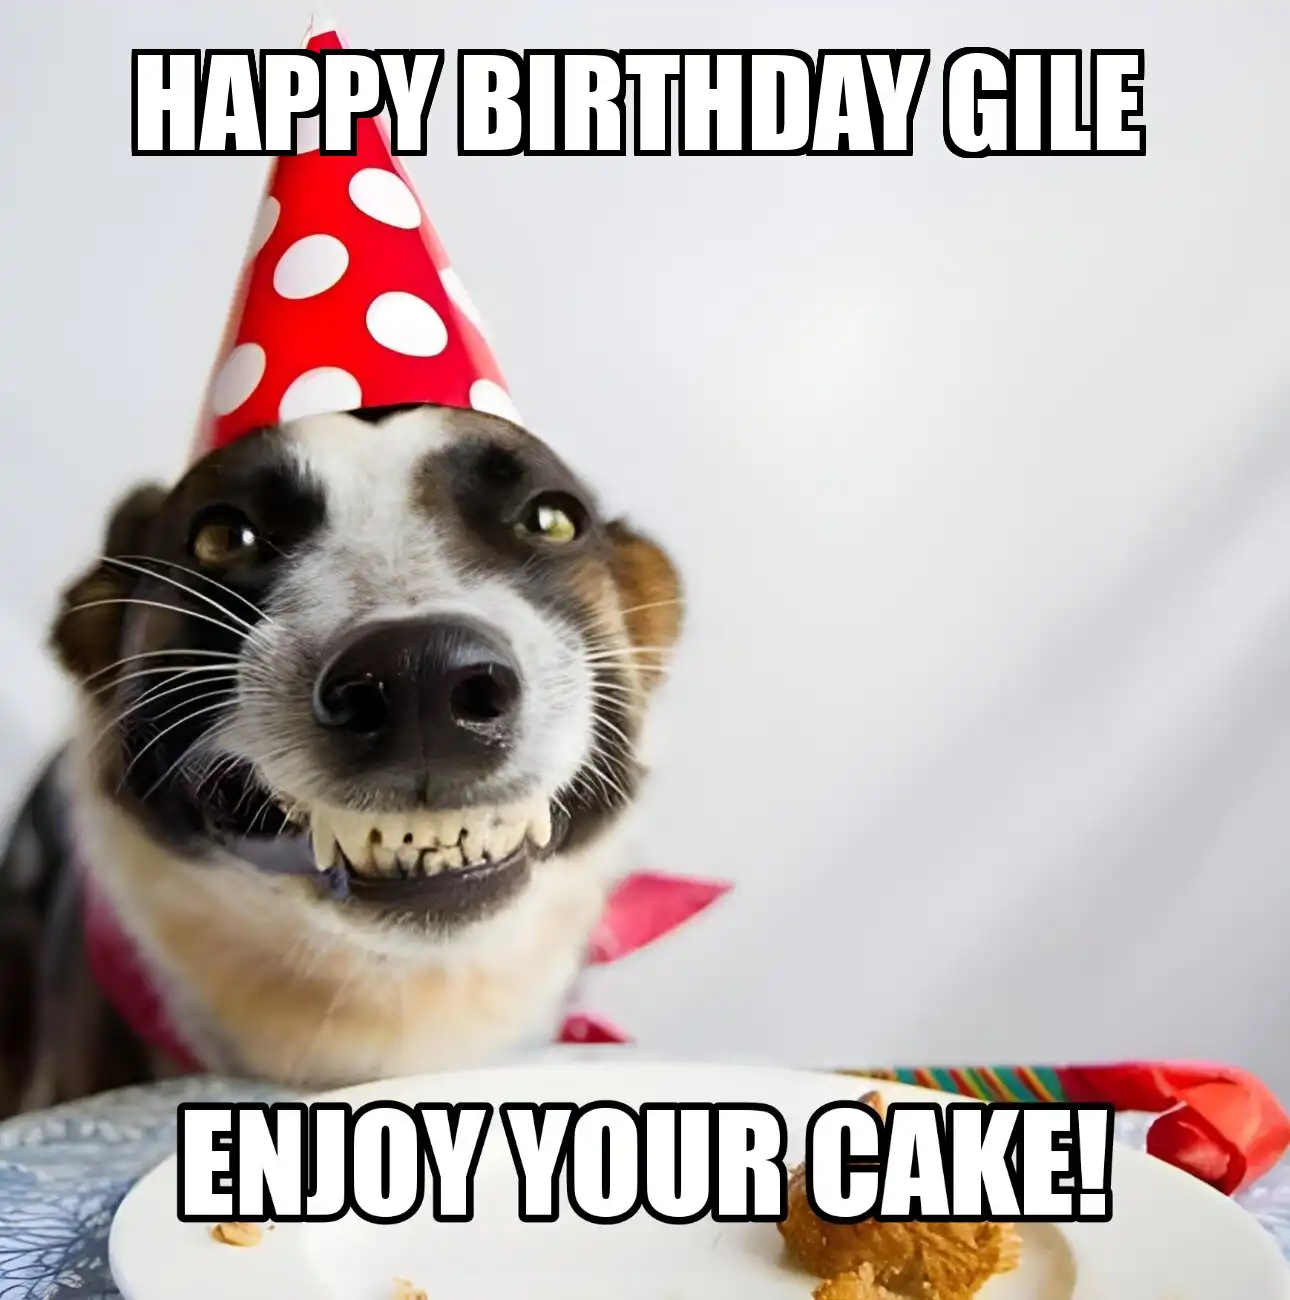 Happy Birthday Gile Enjoy Your Cake Dog Meme